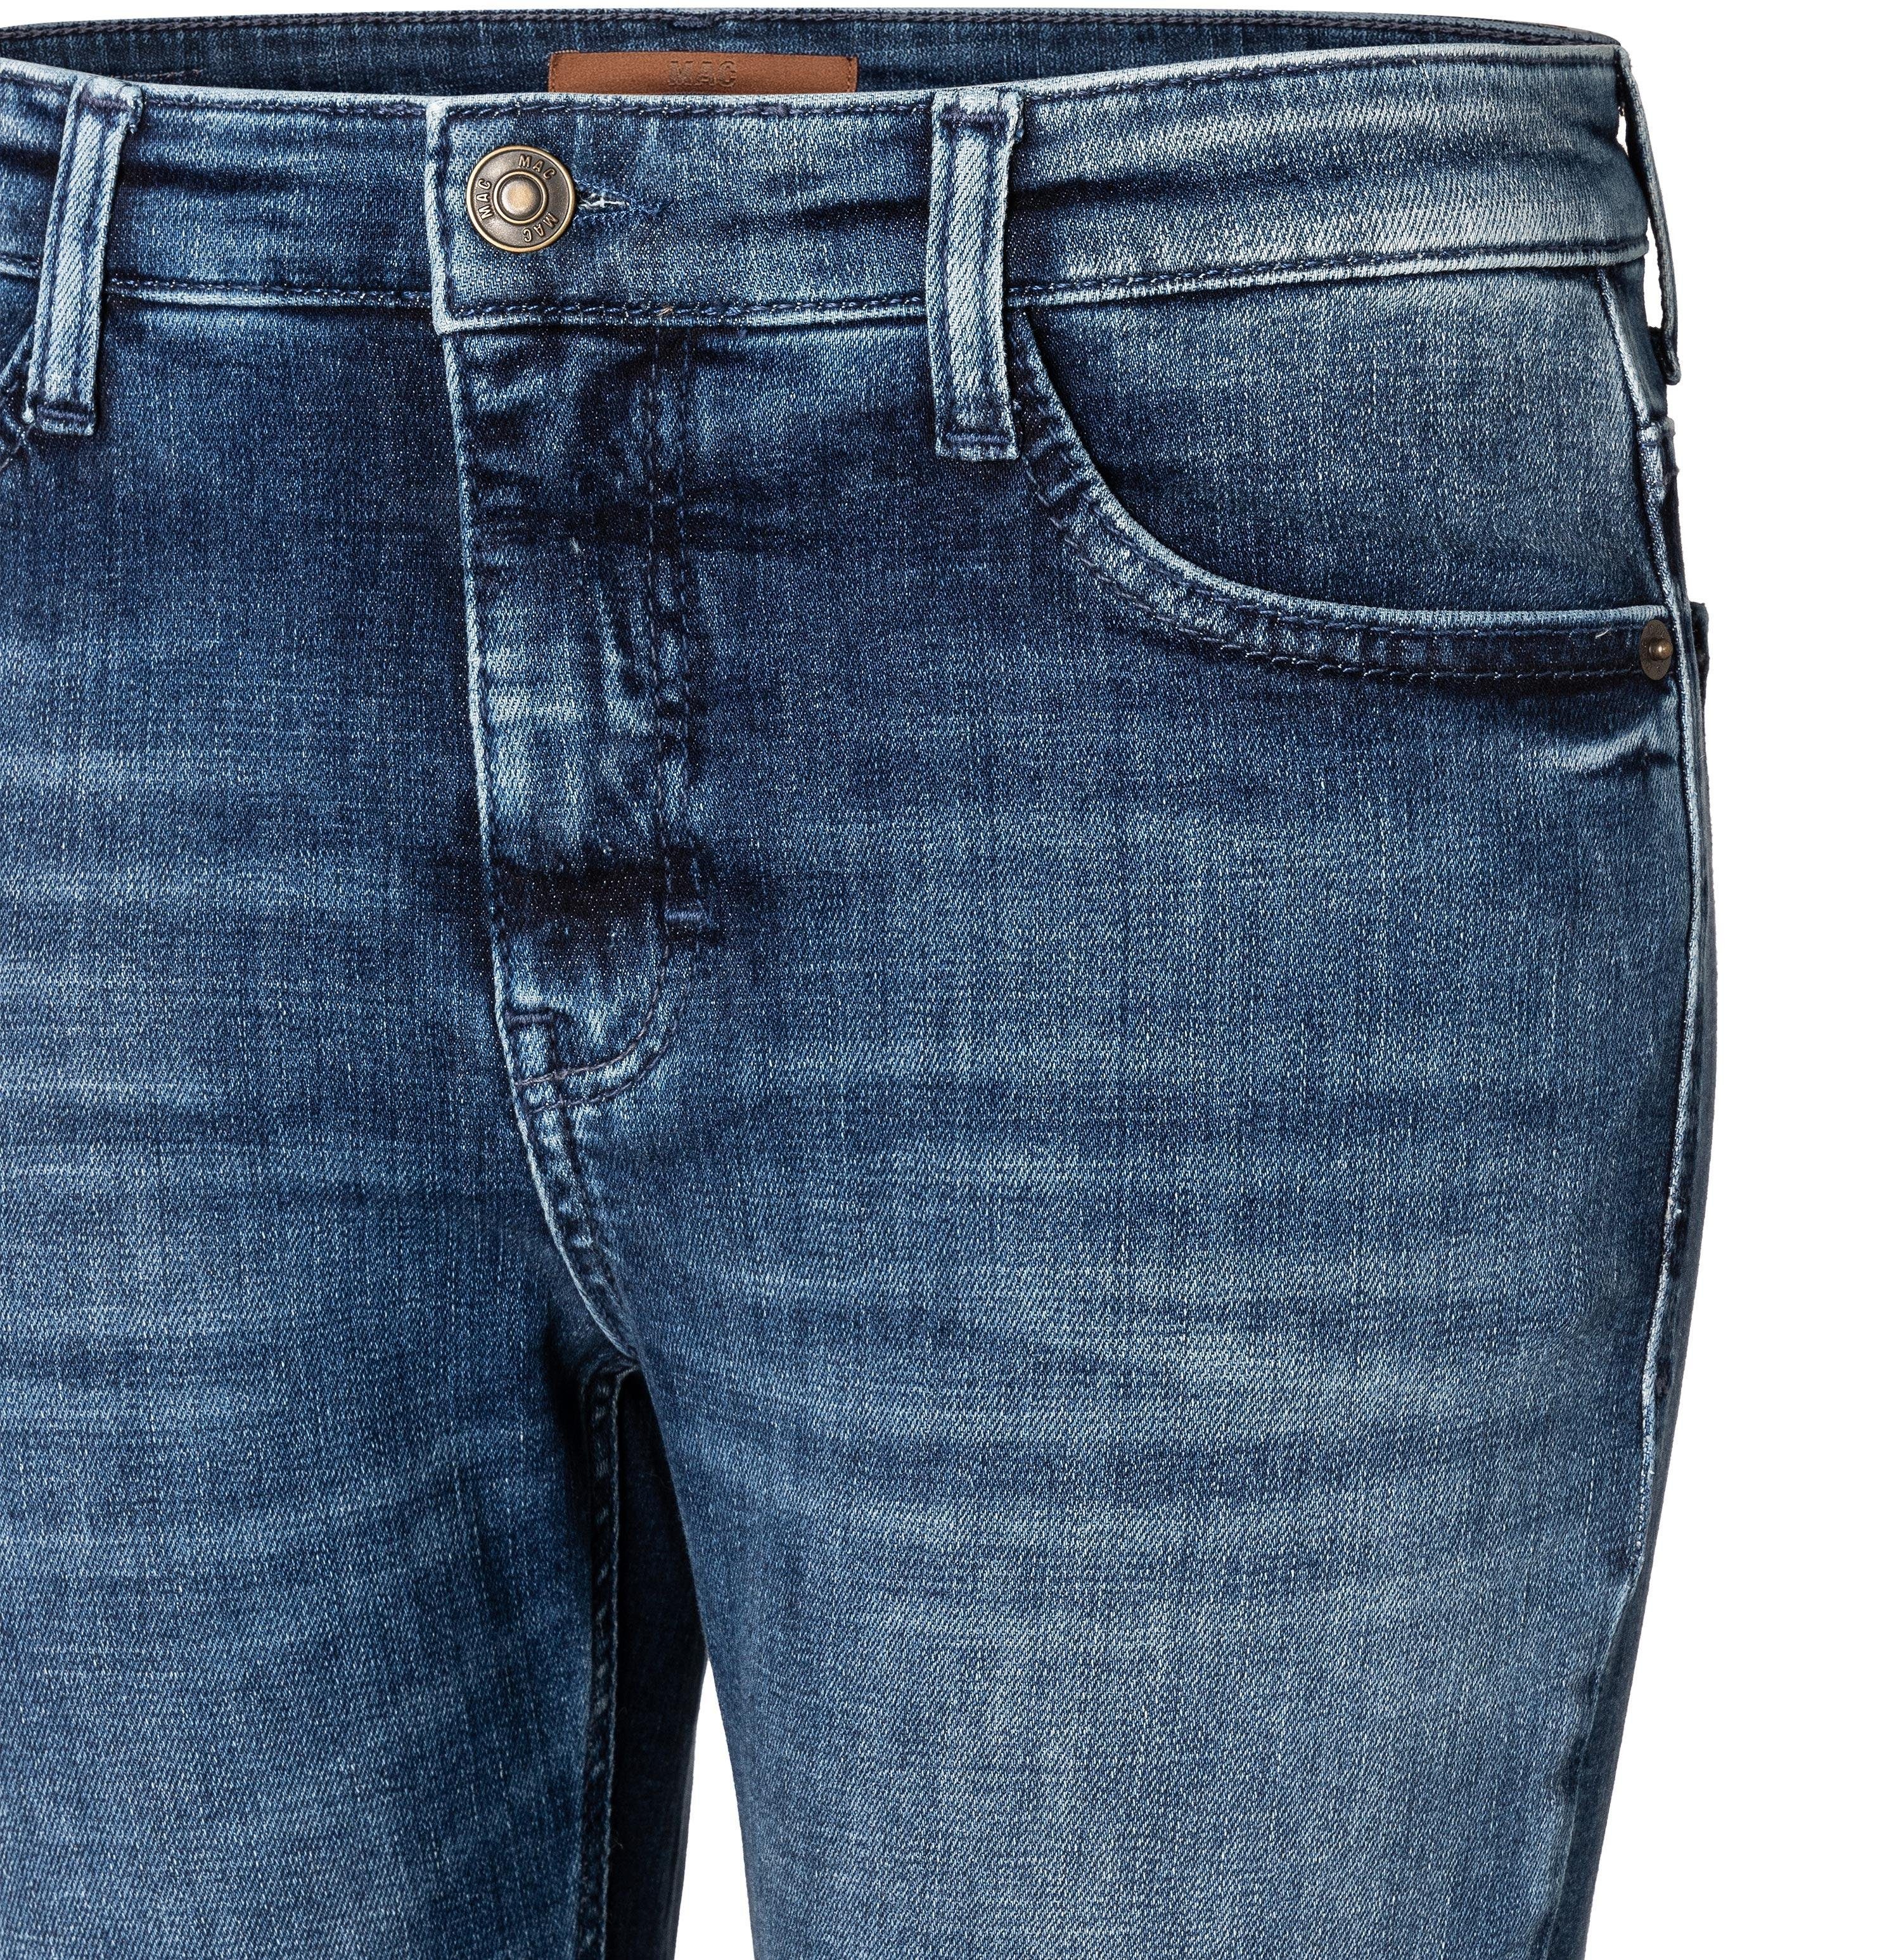 MAC Stretch-Jeans blueish wash SKINNY high-low MAC D628 5996-92-0389